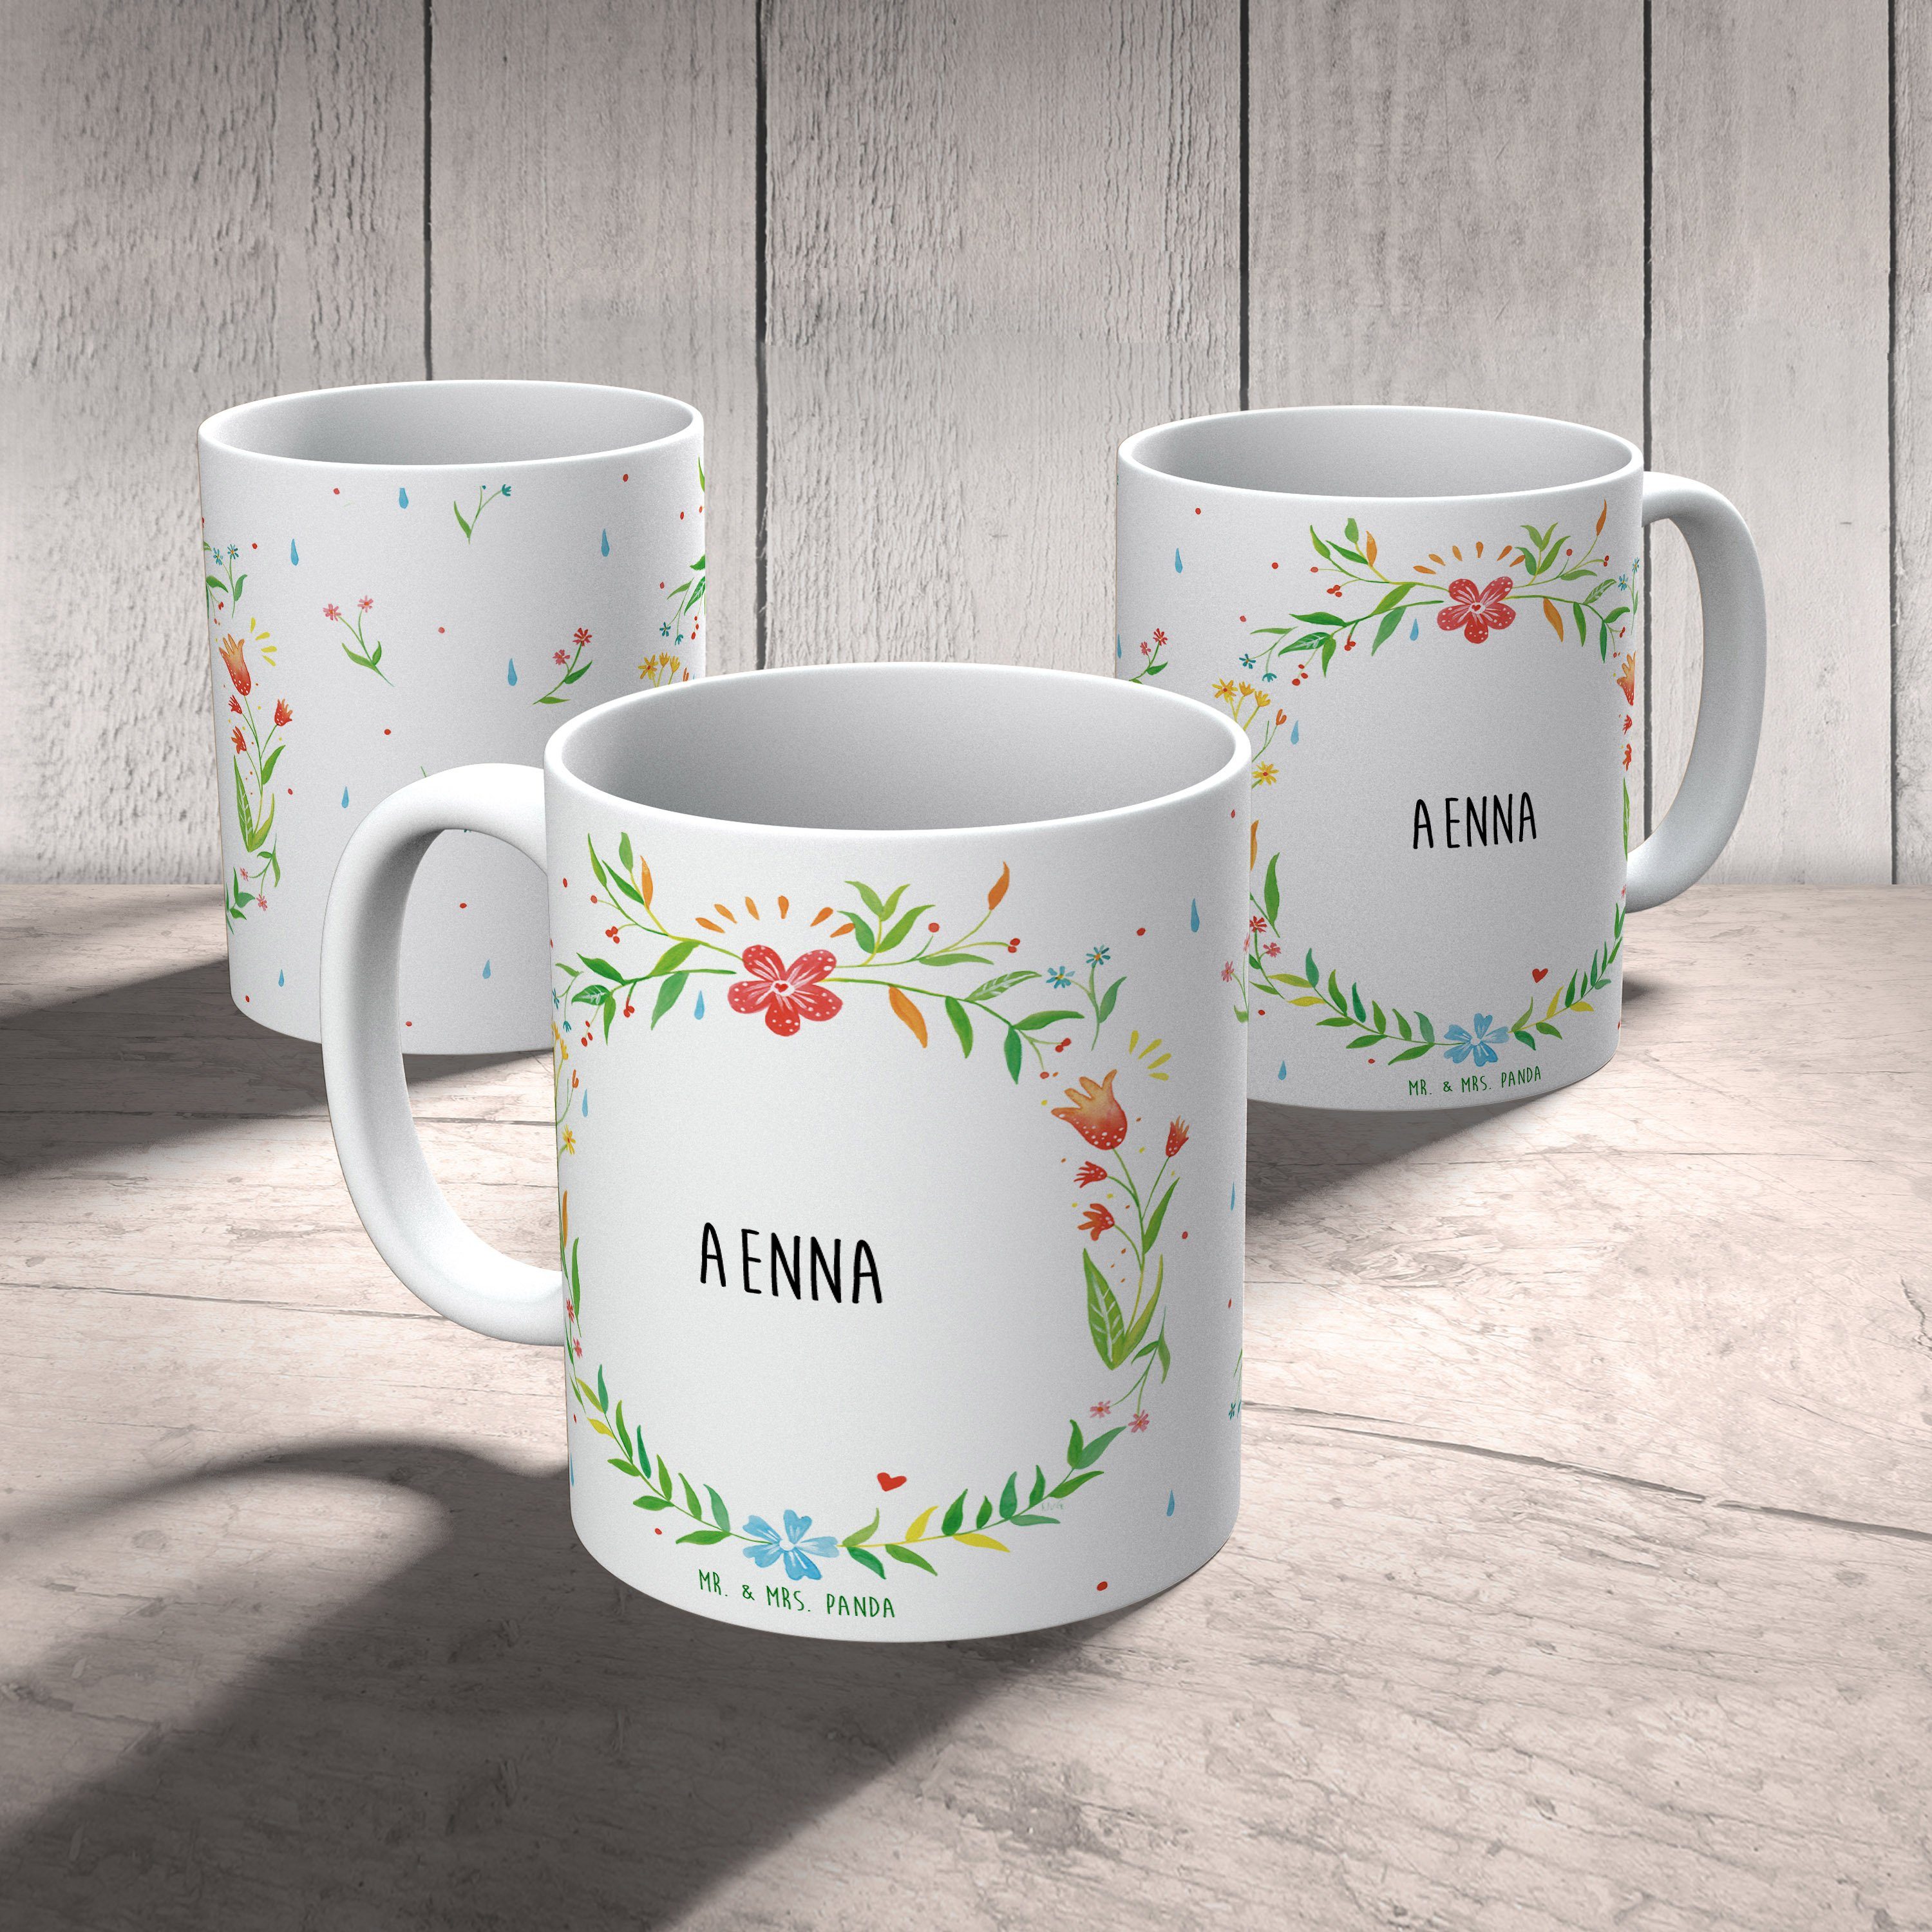 Mr. & Aenna - Keramik Ta, Tasse Panda Geschenk Tasse Mrs. Tasse, Keramiktasse, Büro Motive, Geschenk